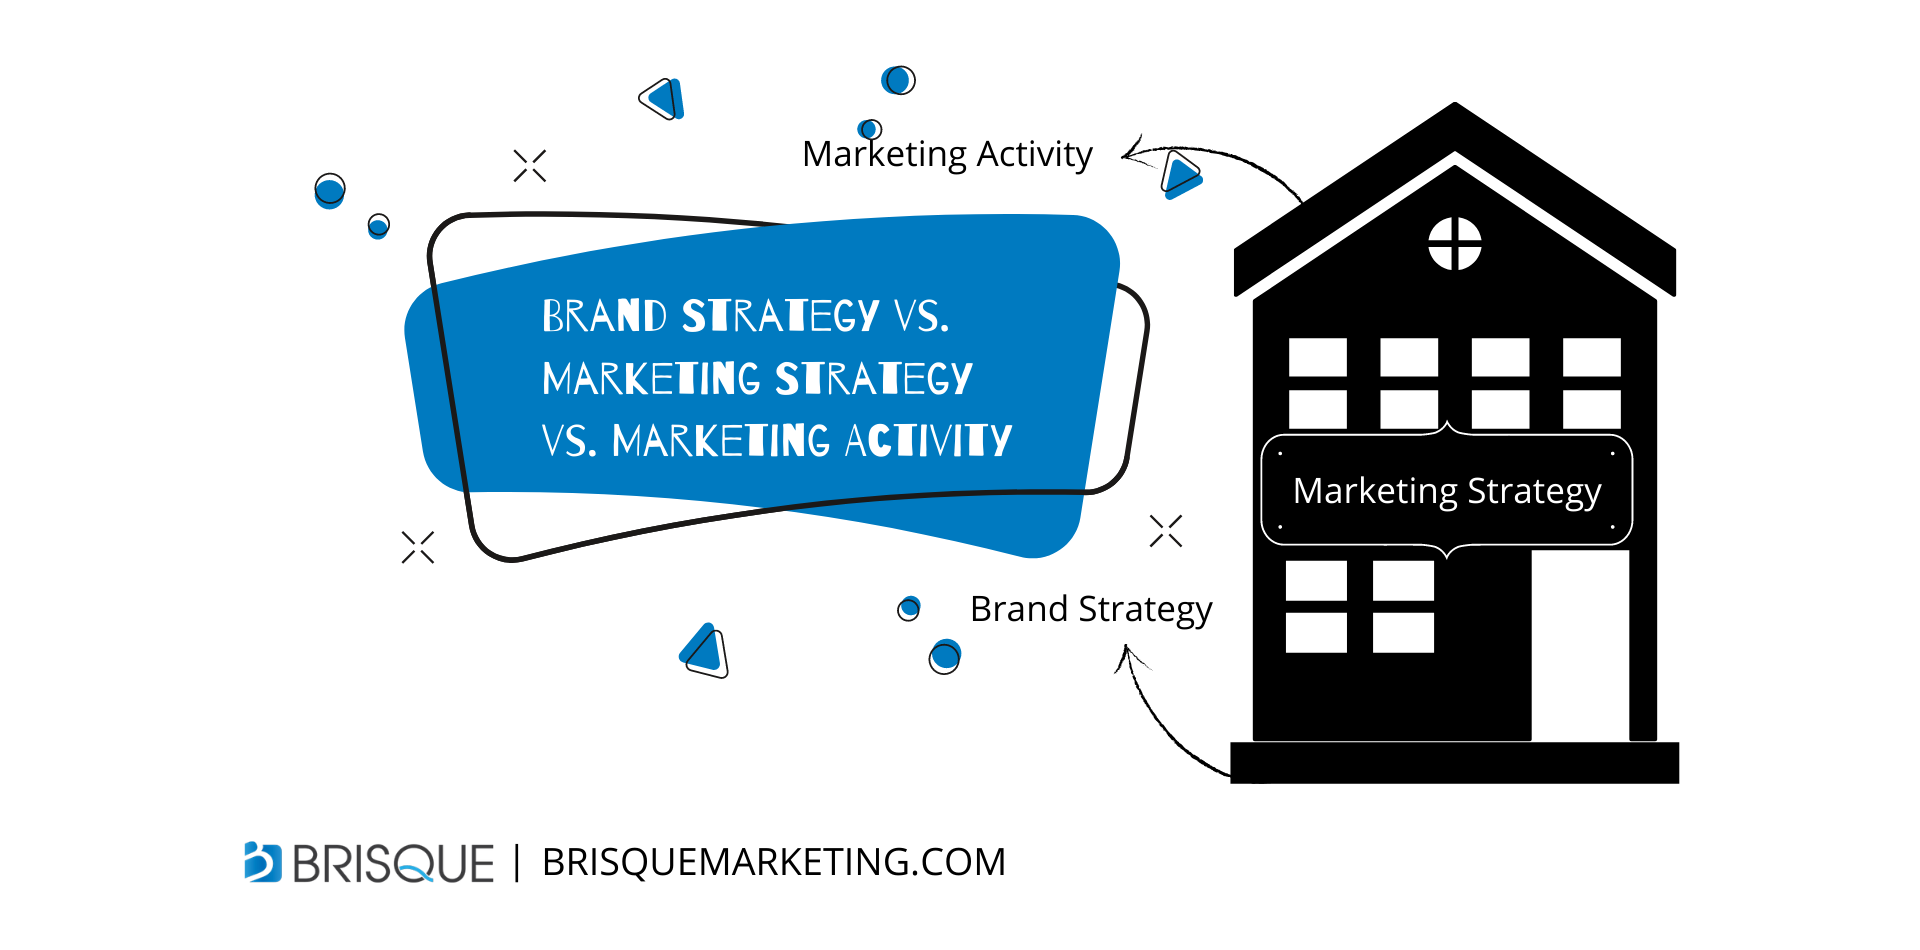 Brand strategy vs. marketing strategy vs. marketing activity